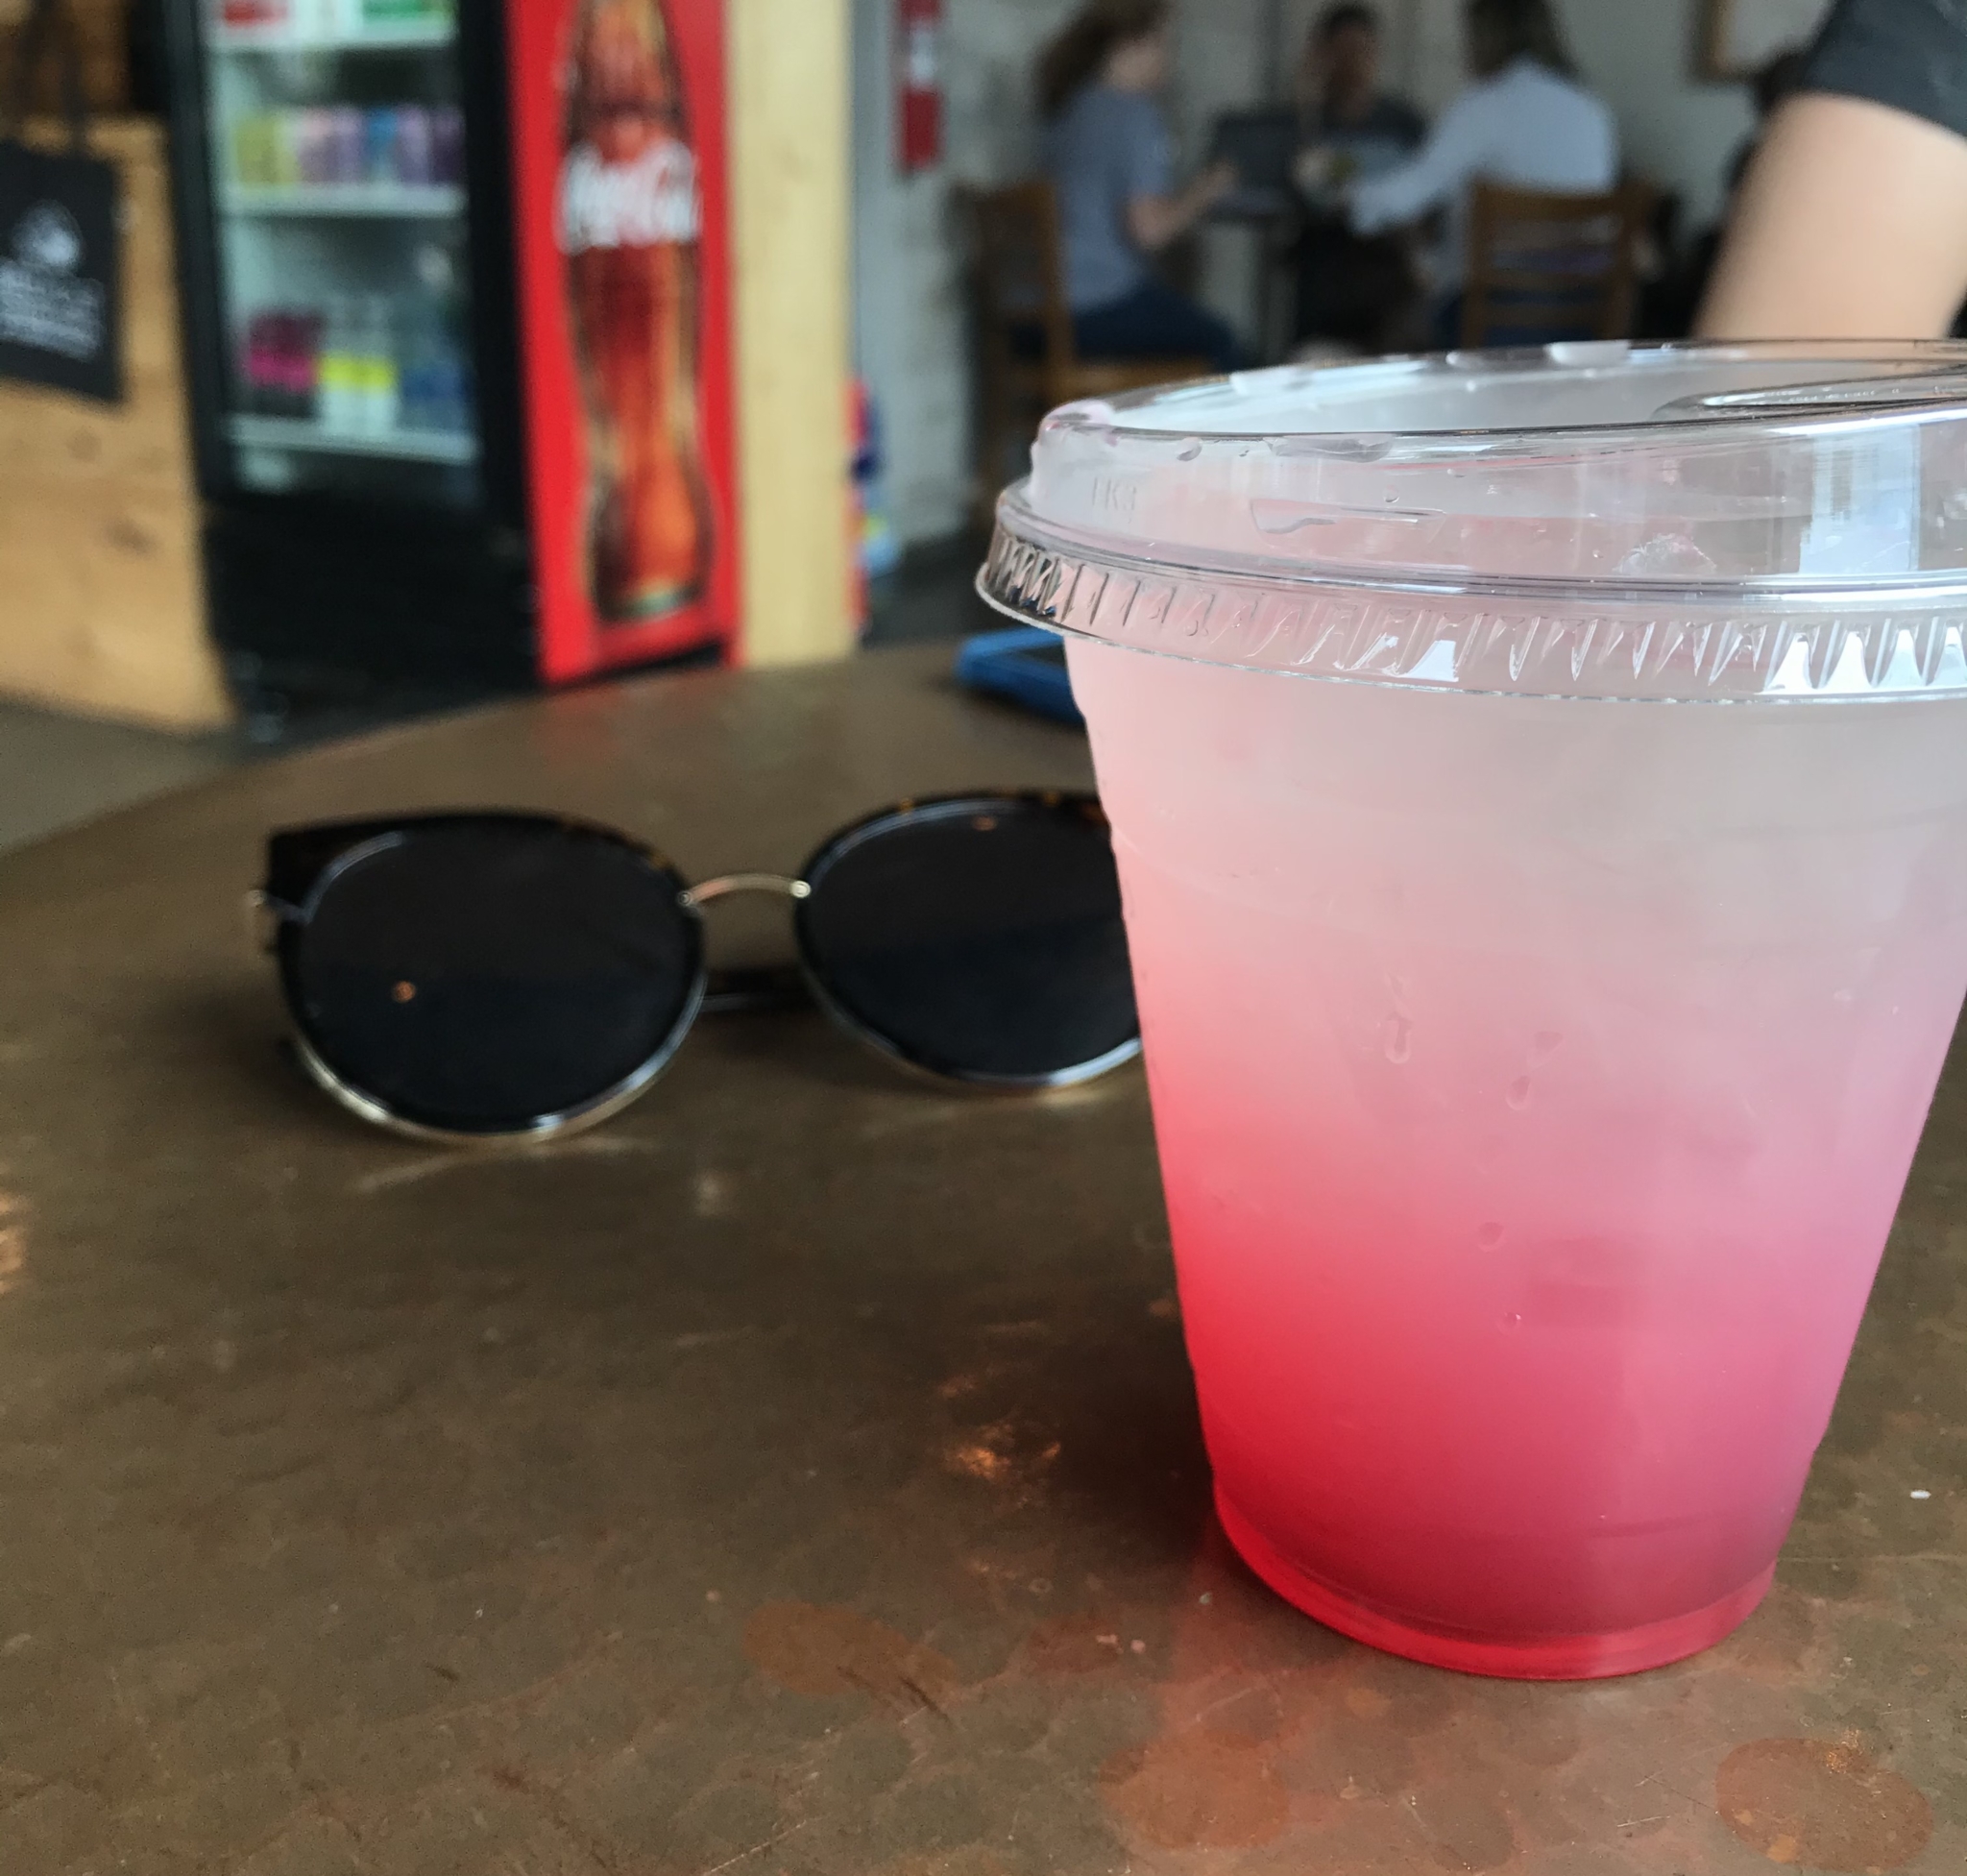 Dragonfruit lemonade from Red Cat Cafe